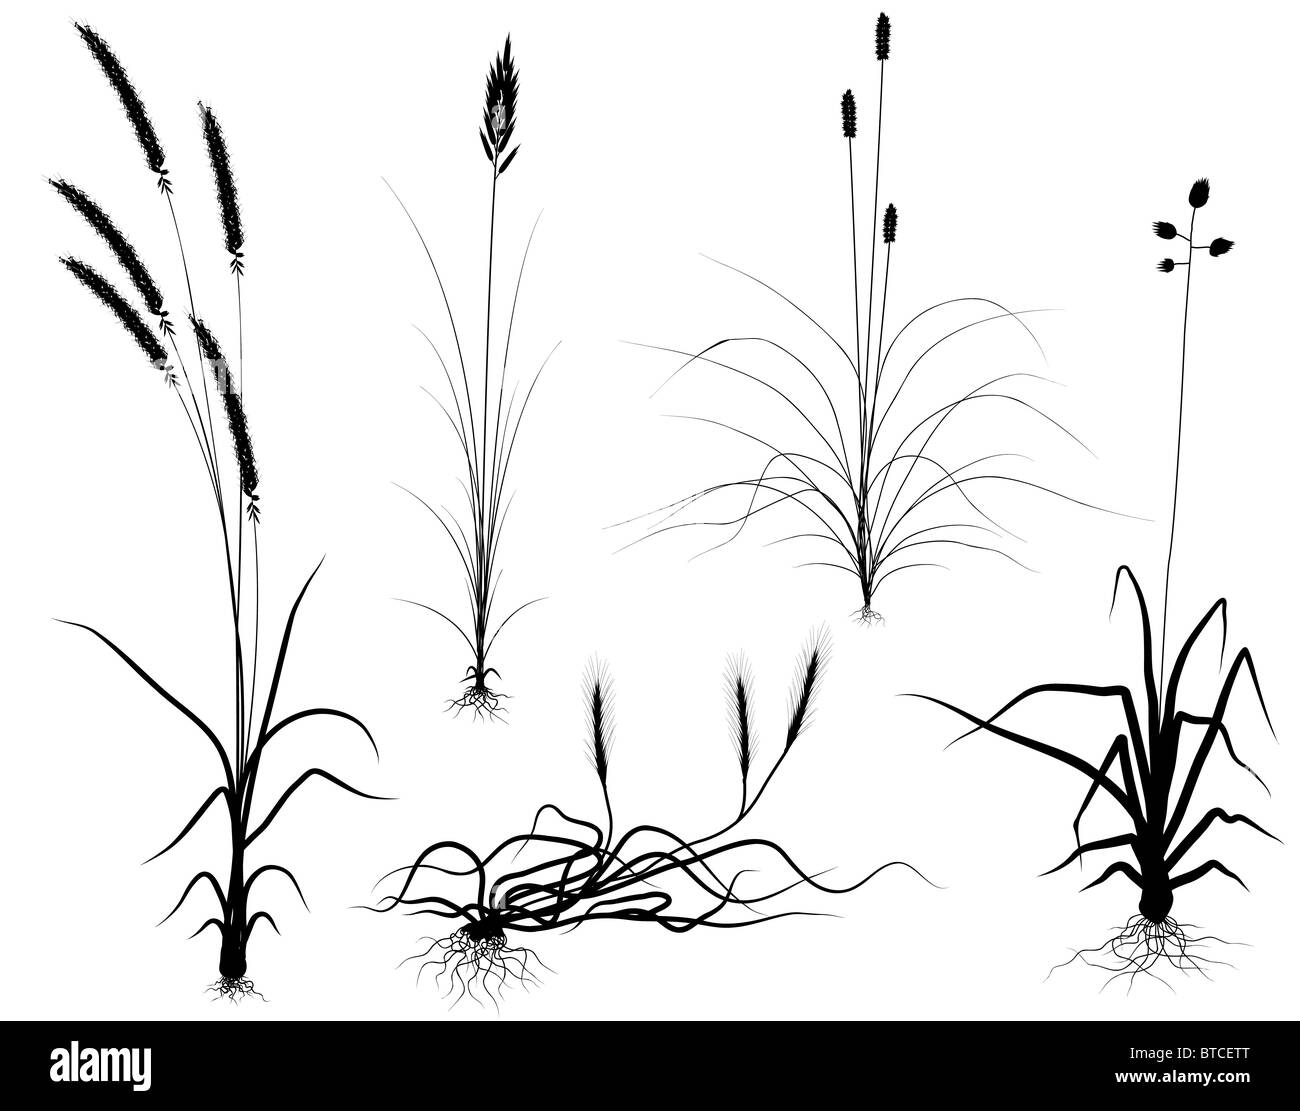 Reihe von illustrierten blühenden Rasen Silhouetten Stockfoto